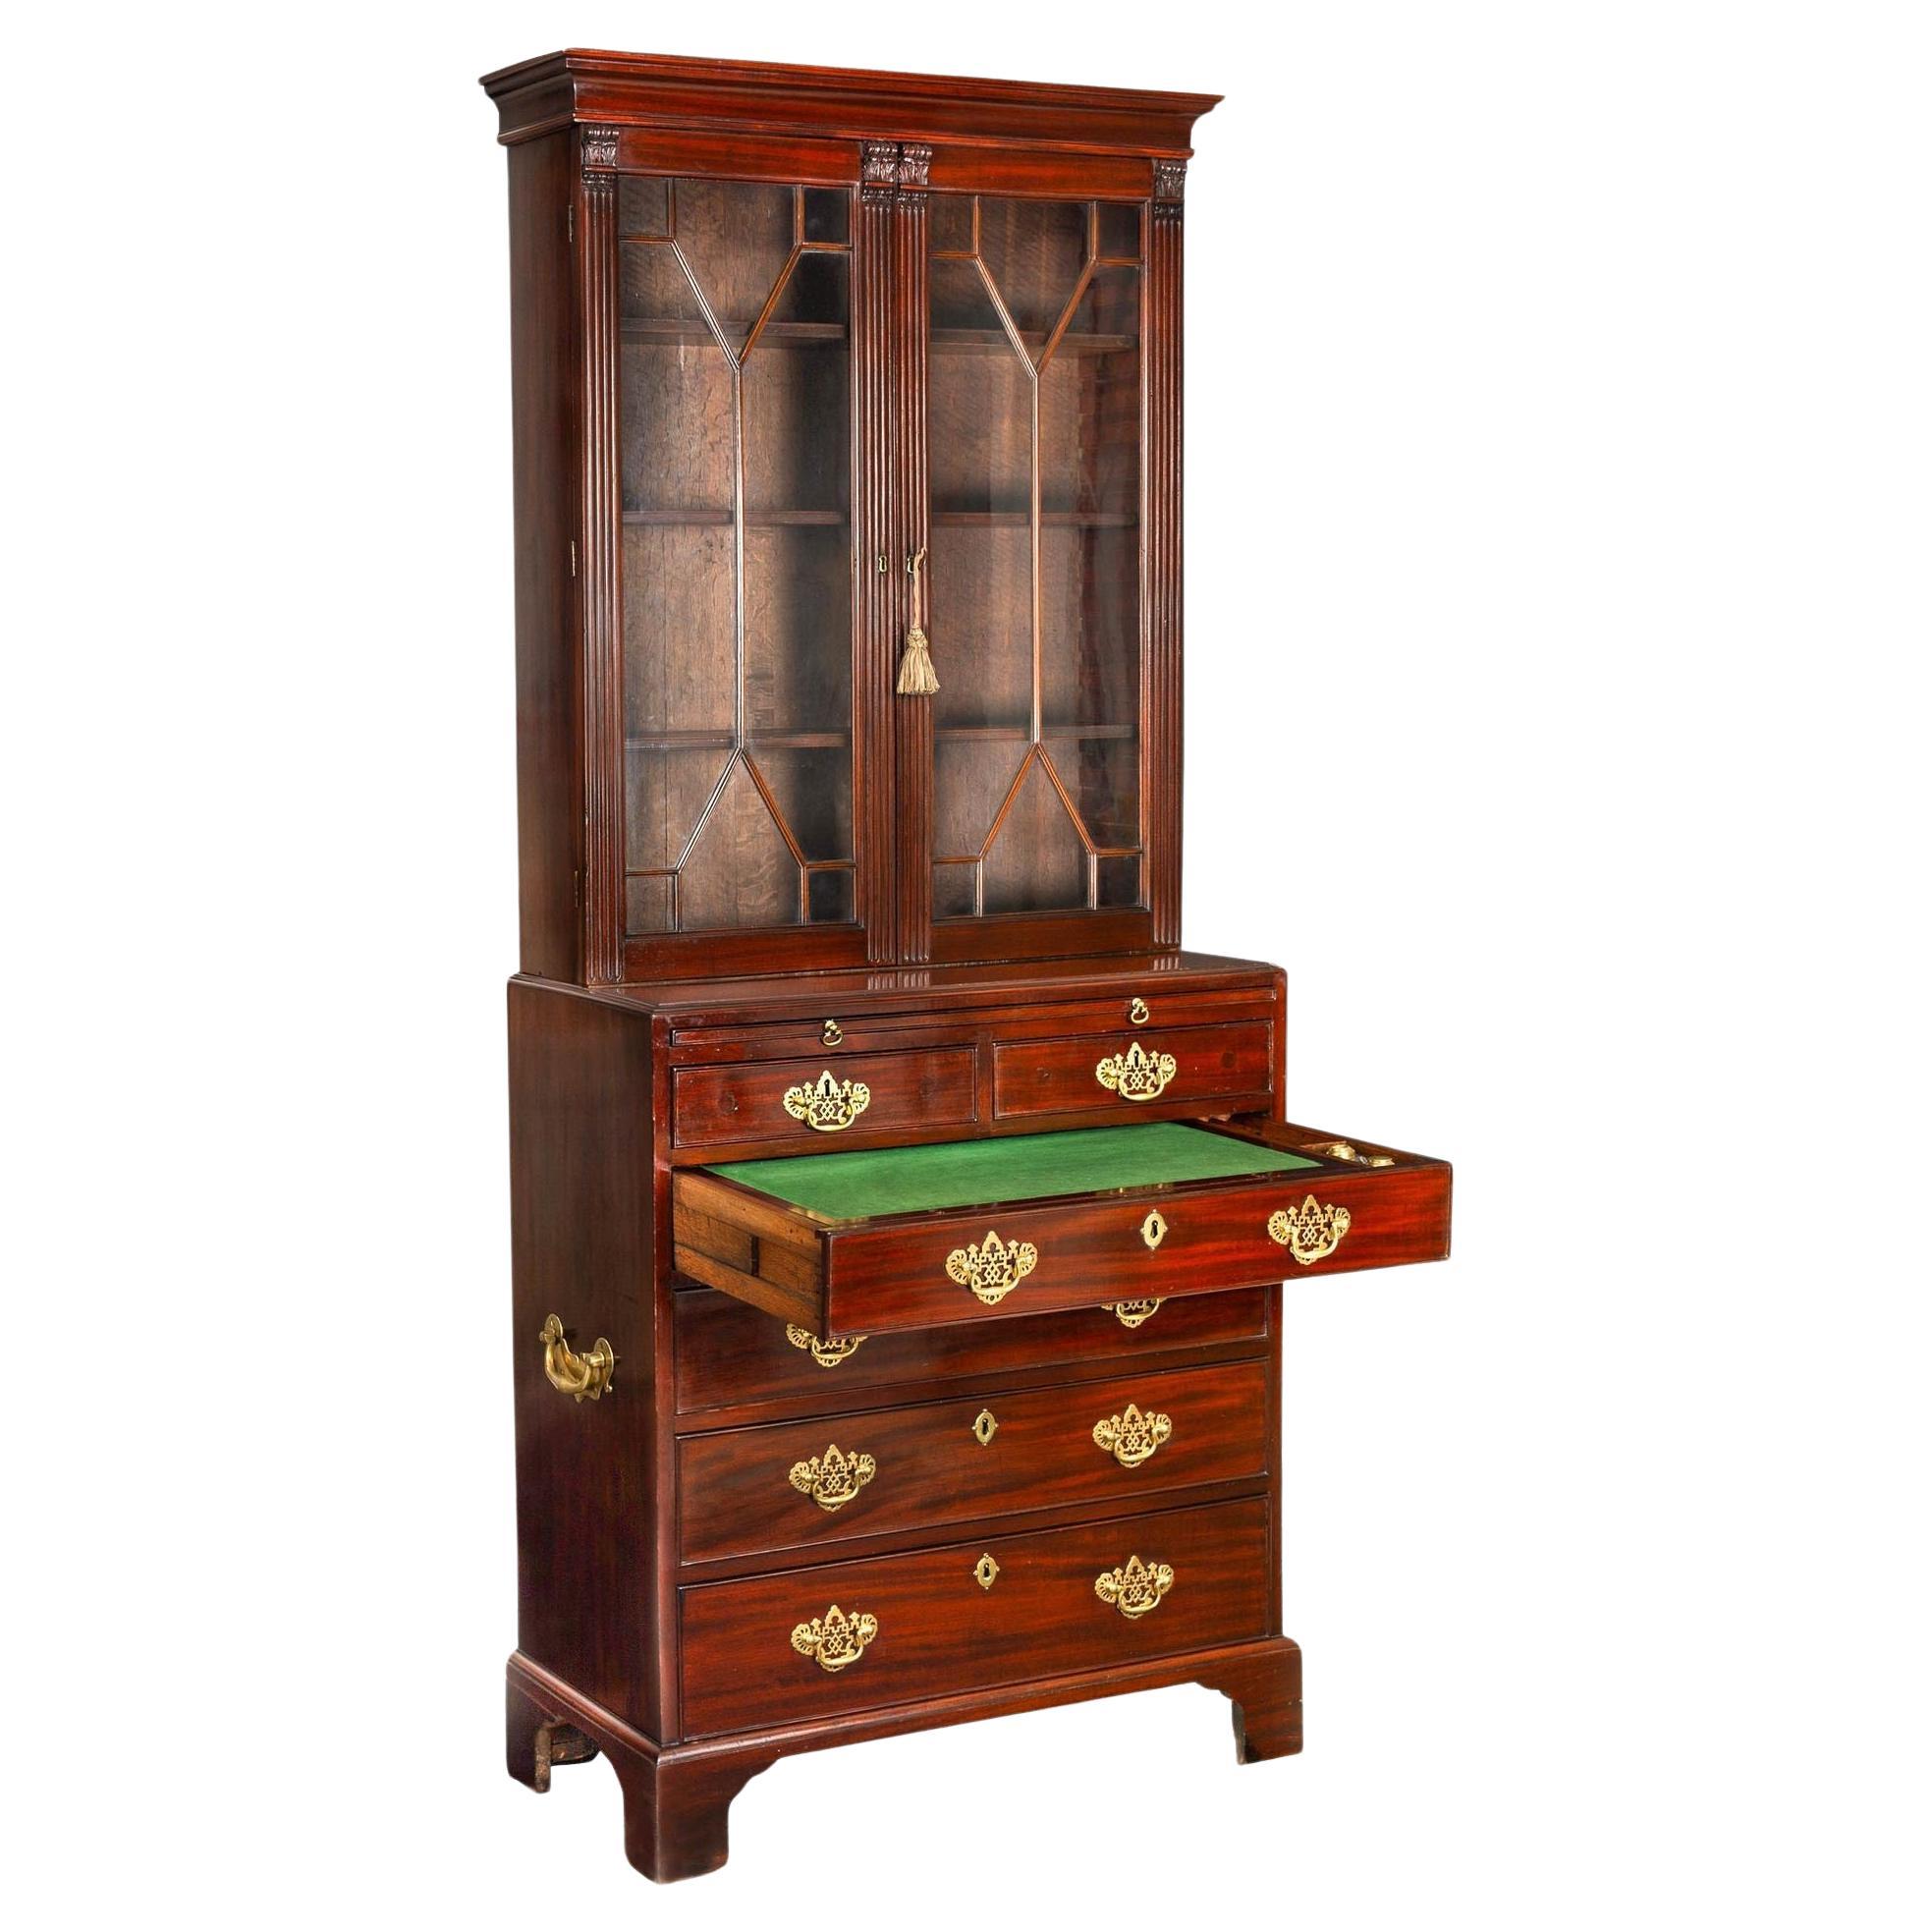 George III English Antique Mahogany Bookcase Secretary Desk circa 1780